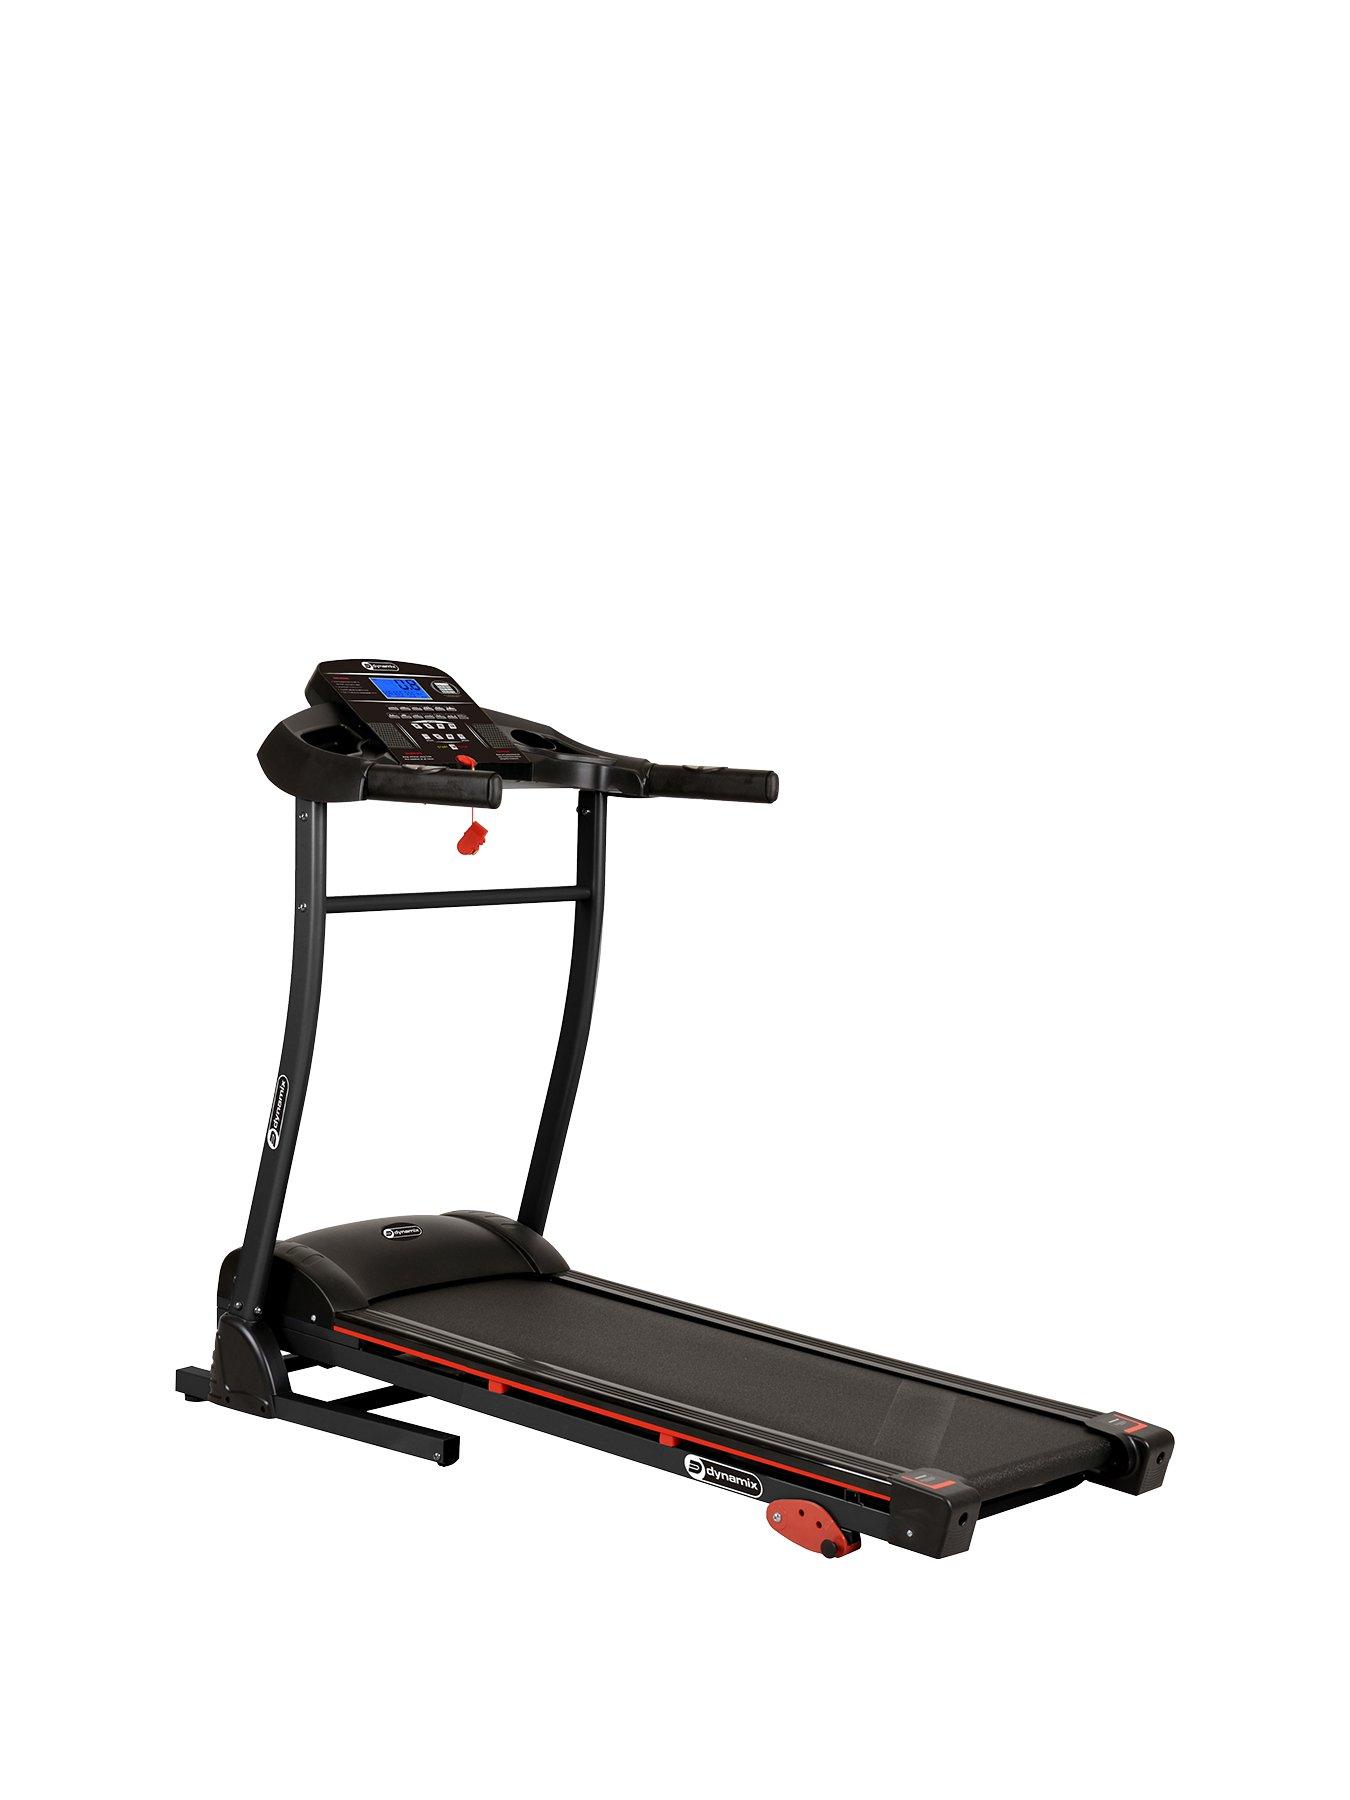 Buy Reach T- 501 5 HP Peak, Home Gym Equipment For Cardio